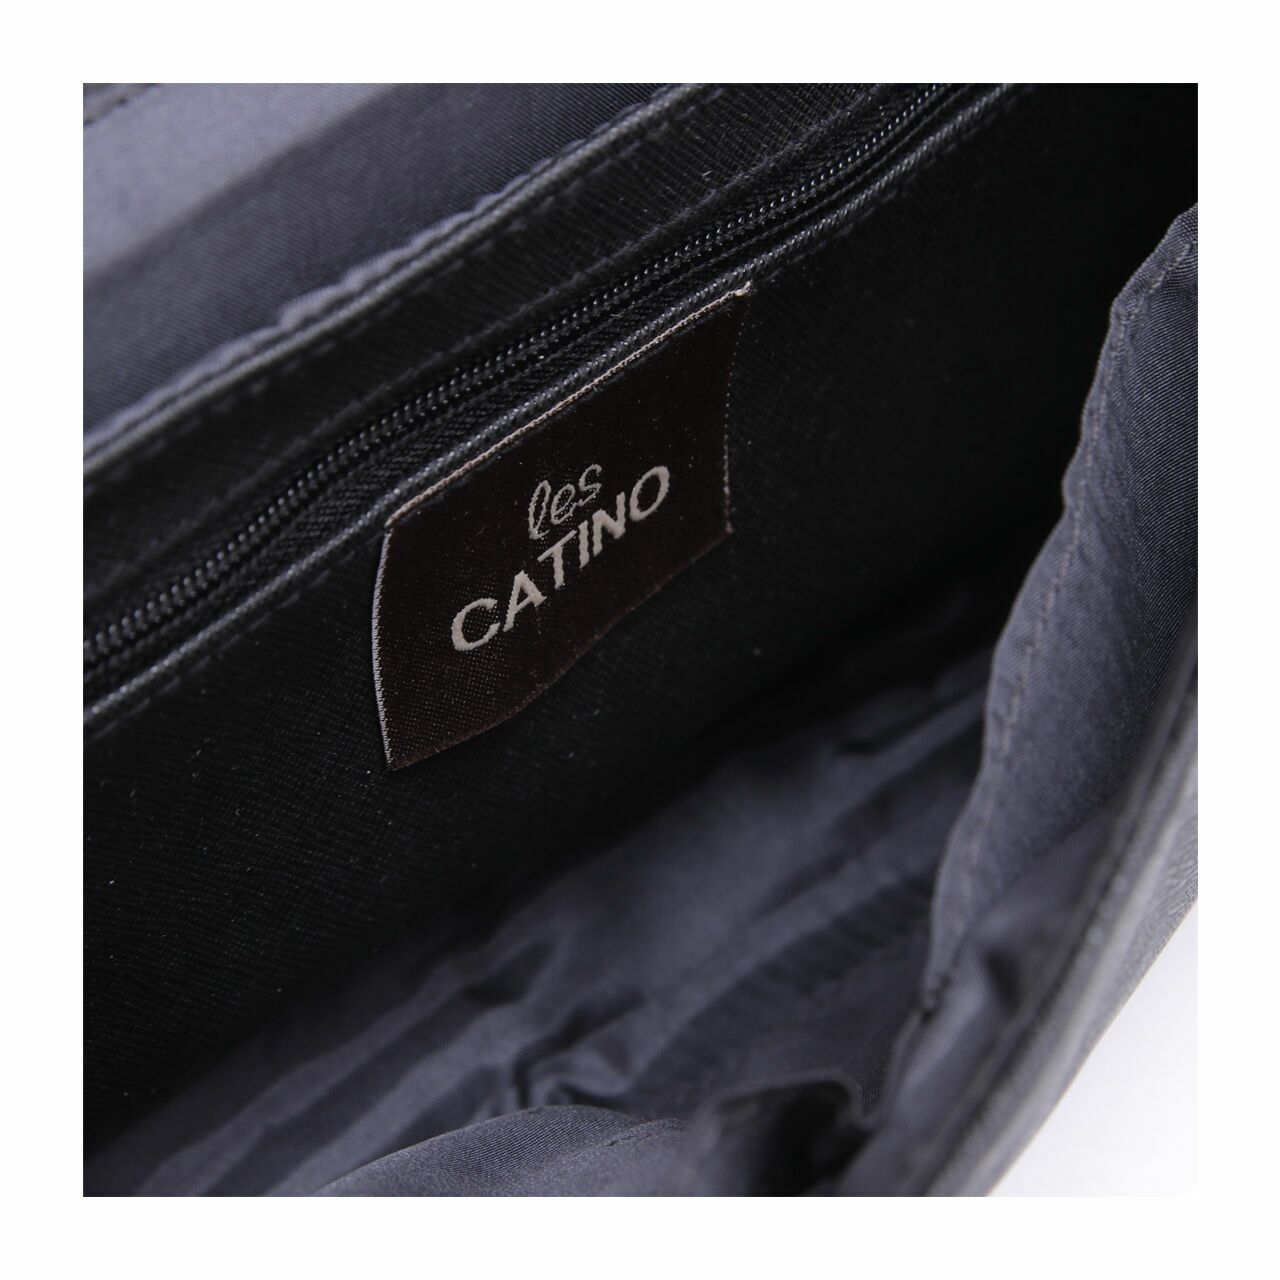 Les Catino Black Sling Bag